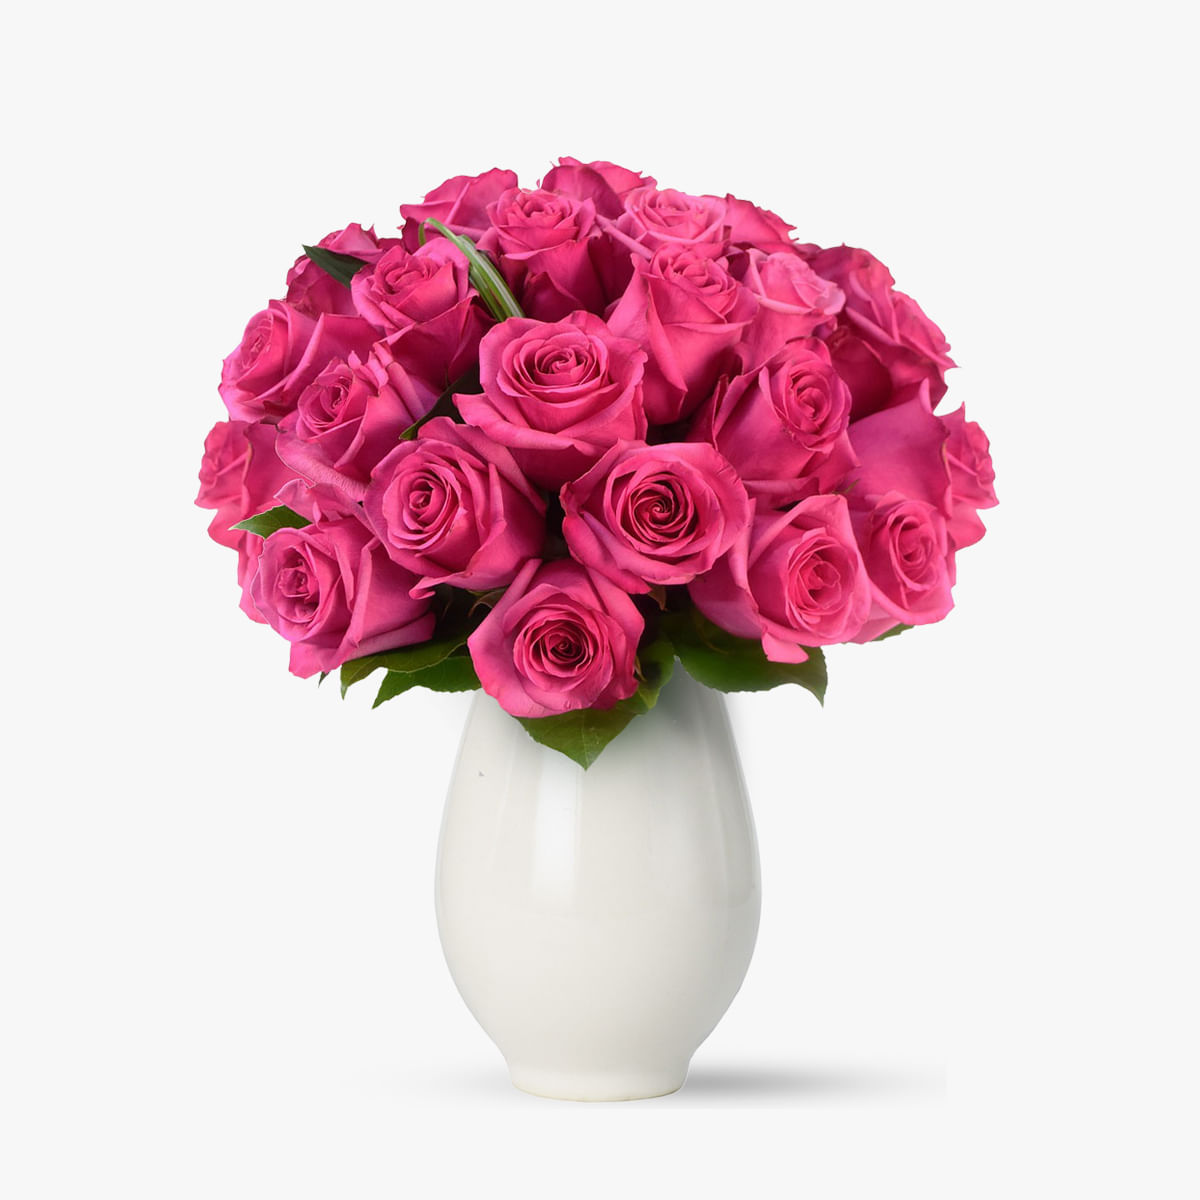 Buchet de 21 trandafiri roz – Standard Buchet imagine 2022